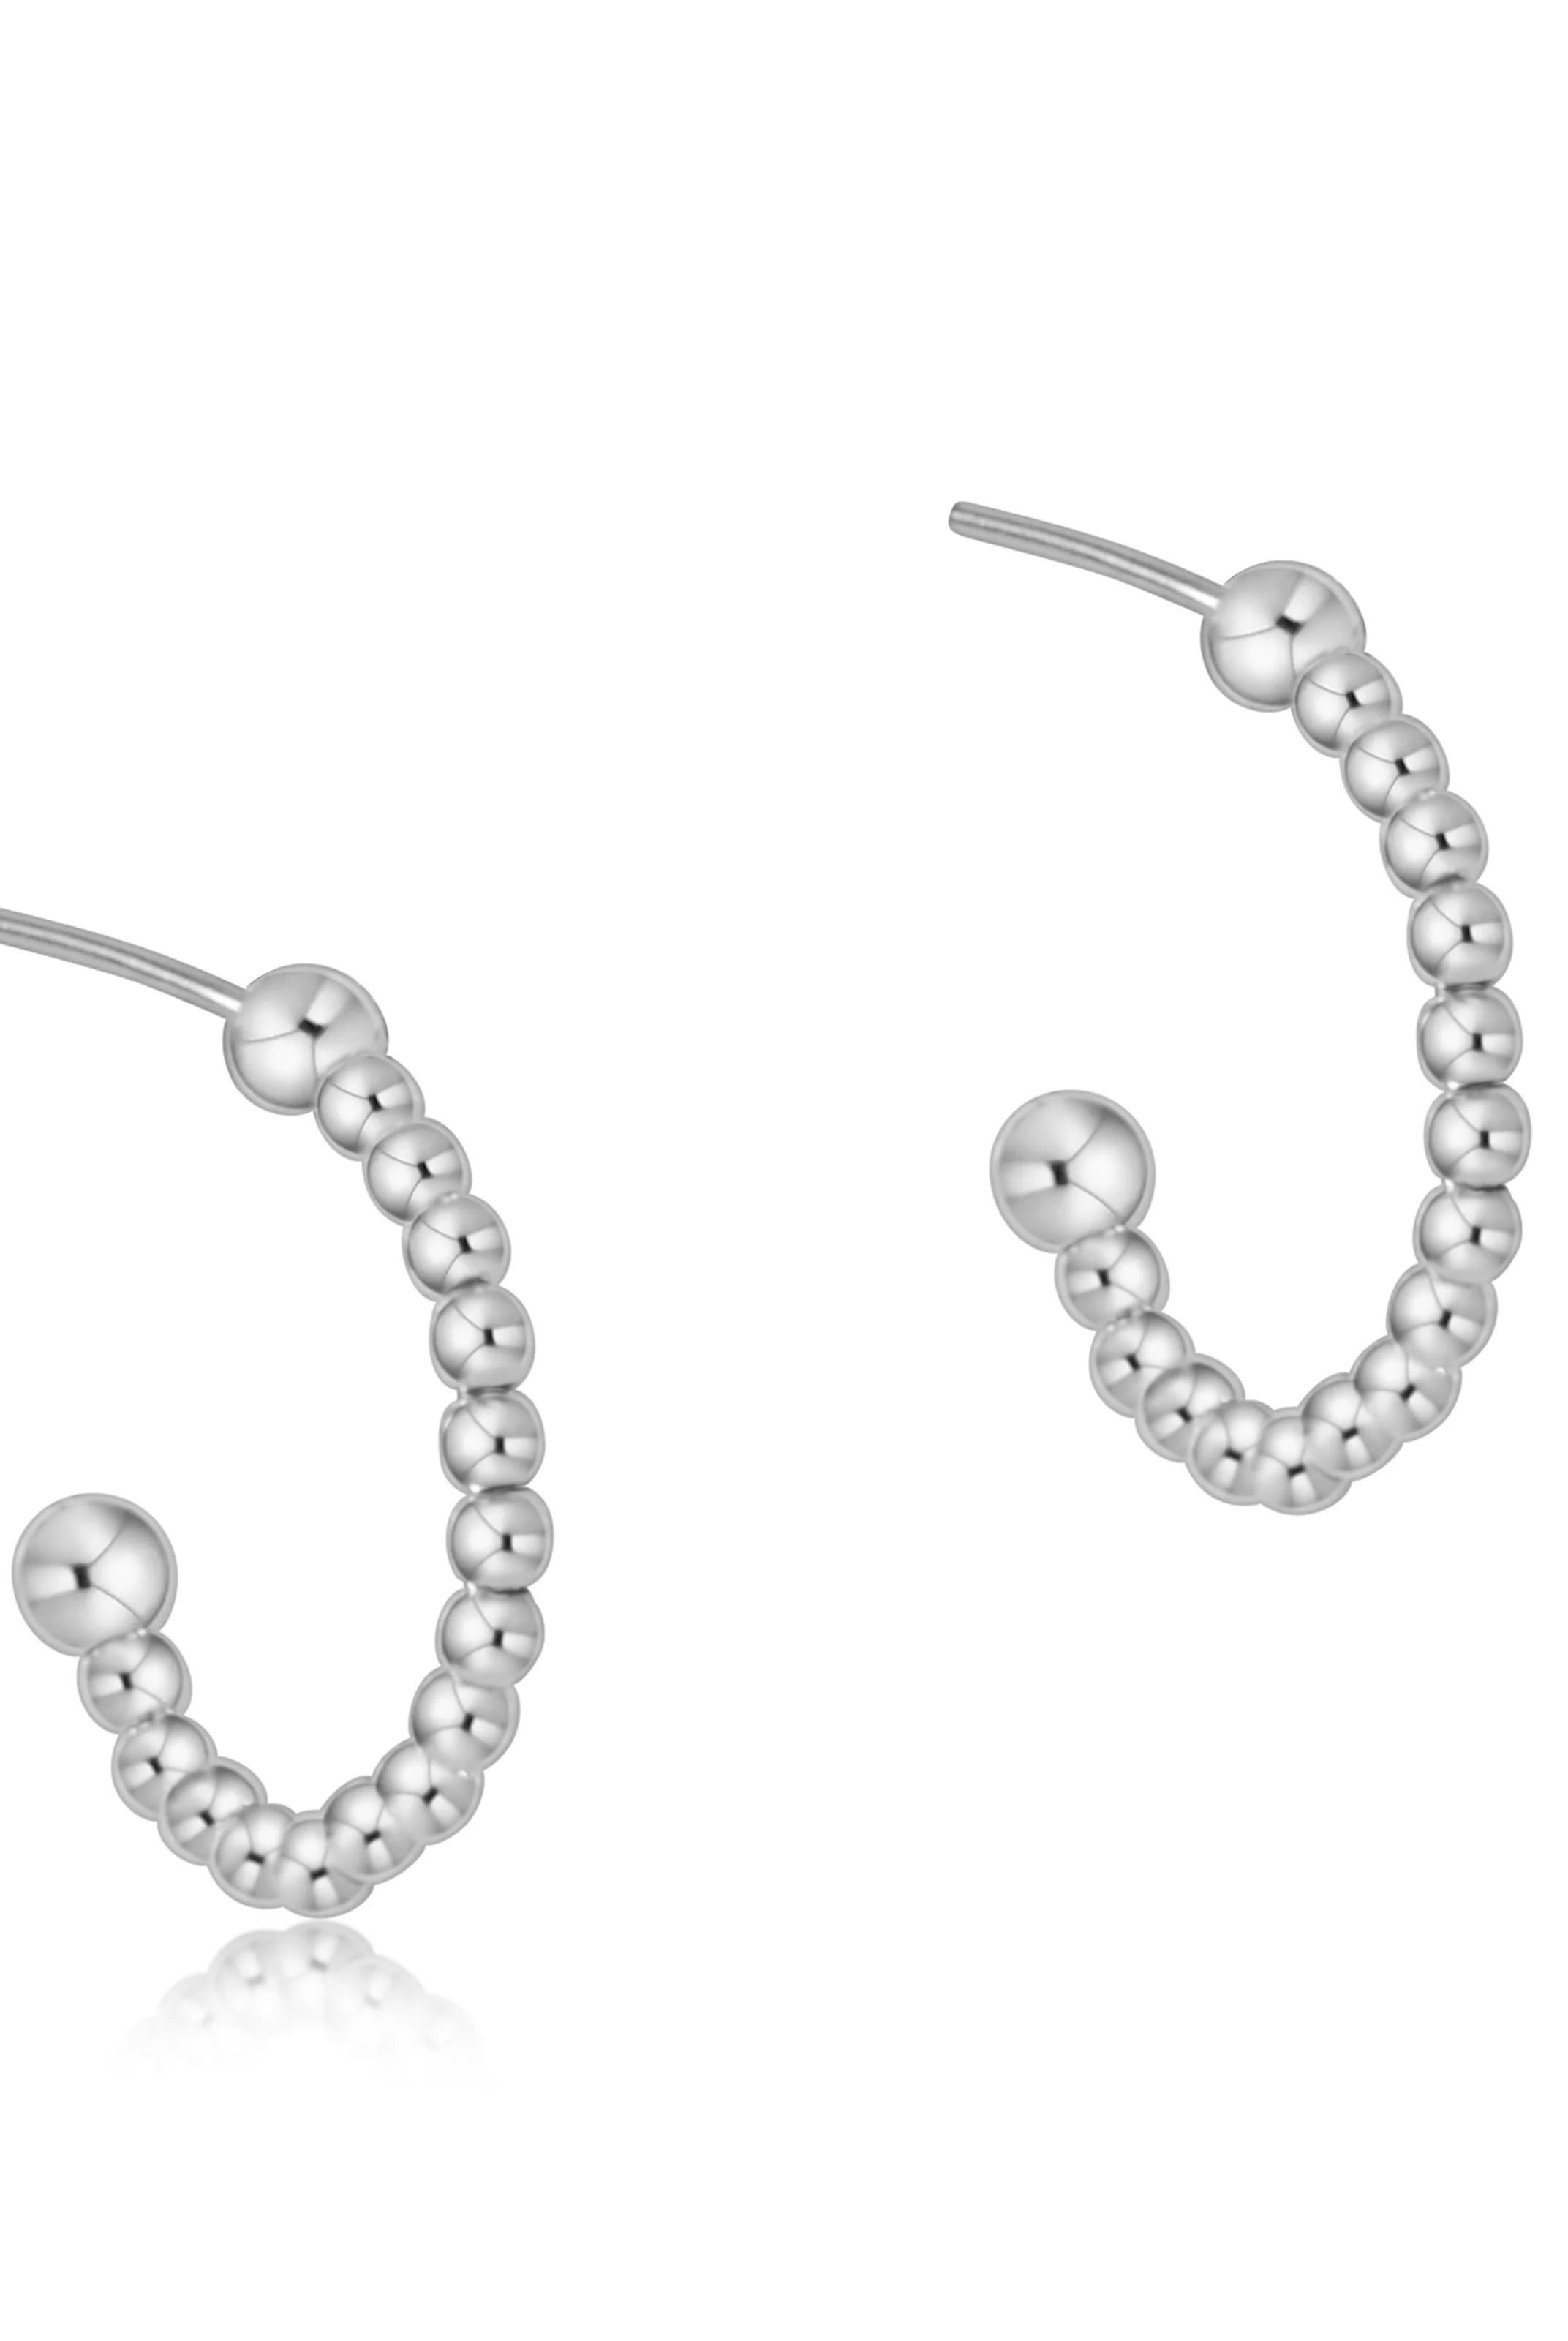 1” Silver Beaded 2mm Post Hoop-Earrings-eNewton-The Lovely Closet, Women's Fashion Boutique in Alexandria, KY